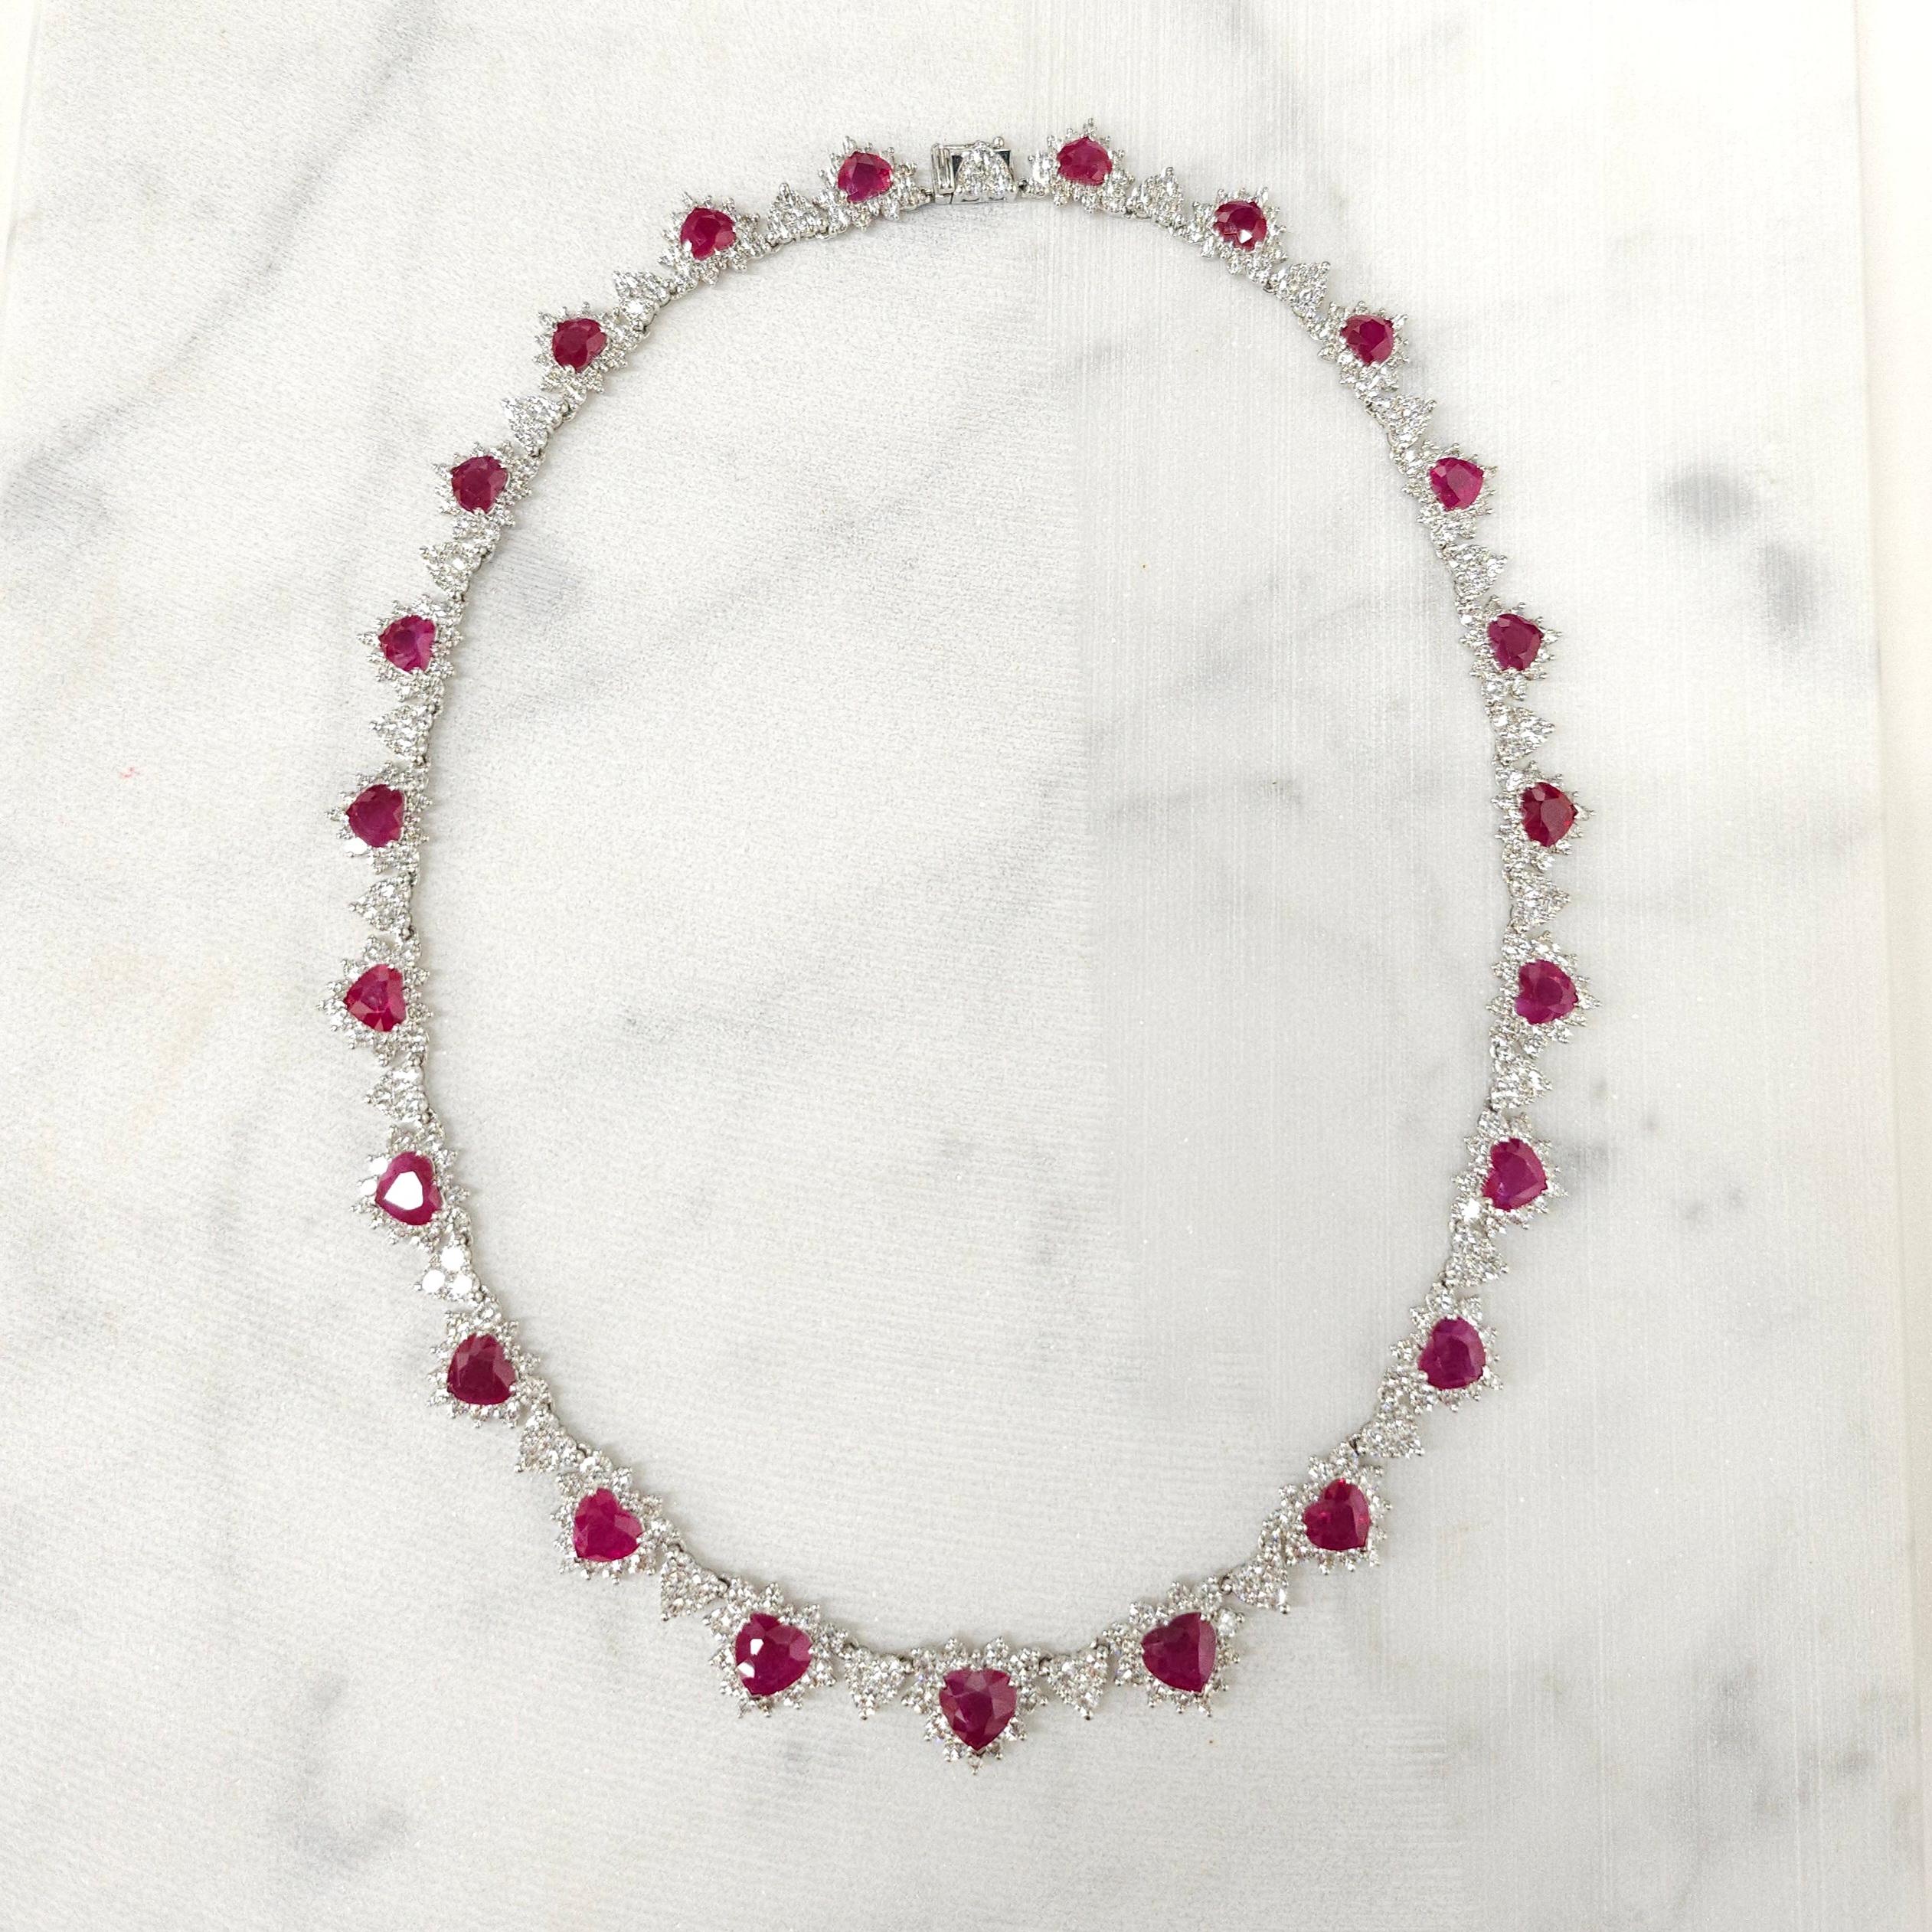 IGI Certified 26.58 Carat Burma Ruby & 18.85 Carat Diamond Necklace in 18K Gold For Sale 8